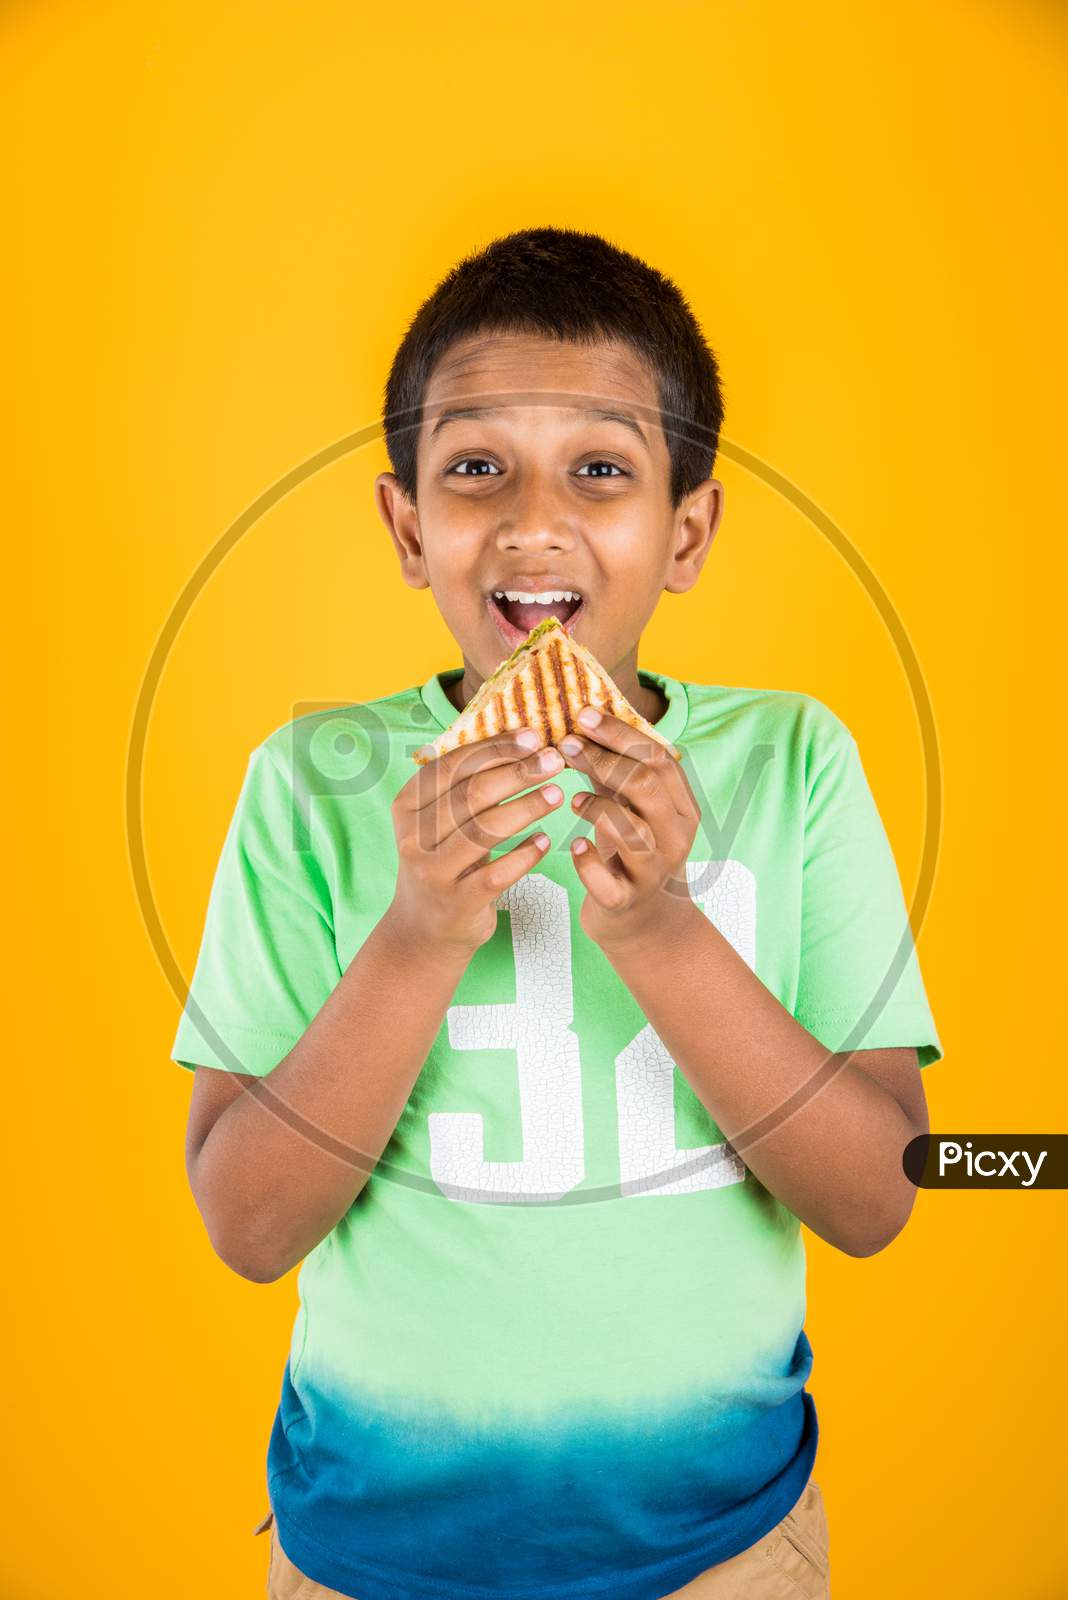 small boy child eating sandwich